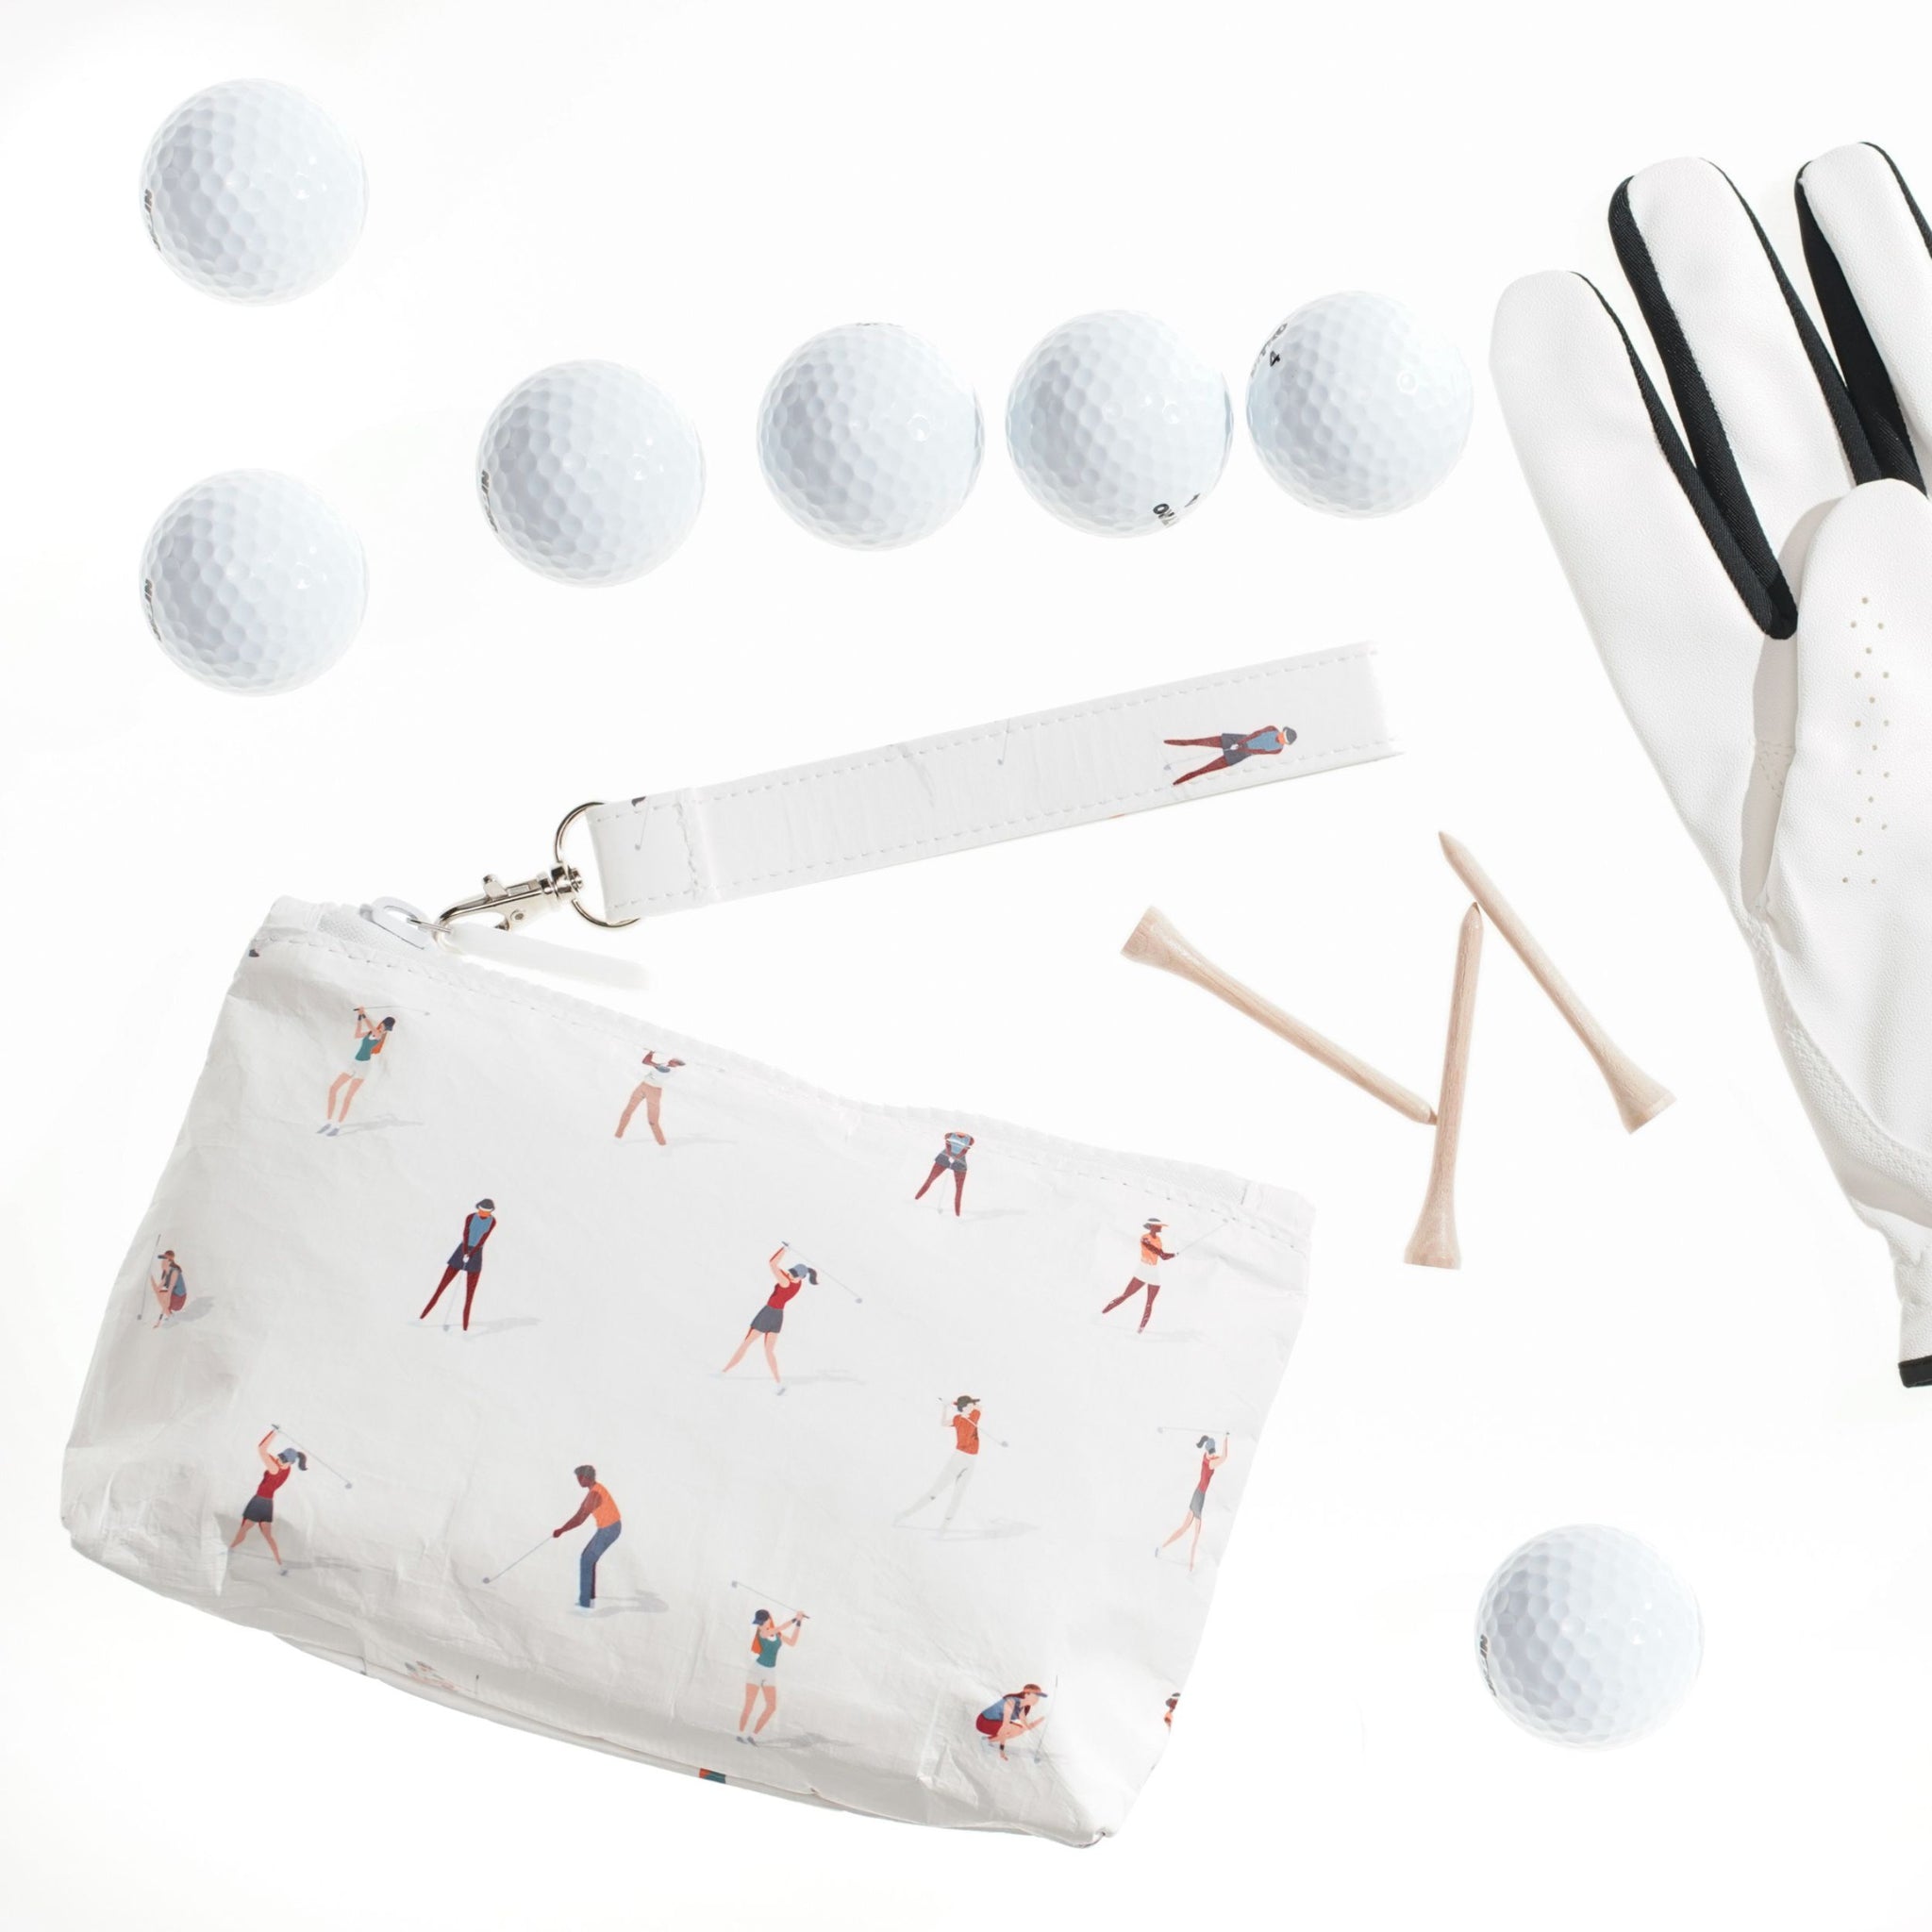 organize your golf accessories, 3 pack wrist straps